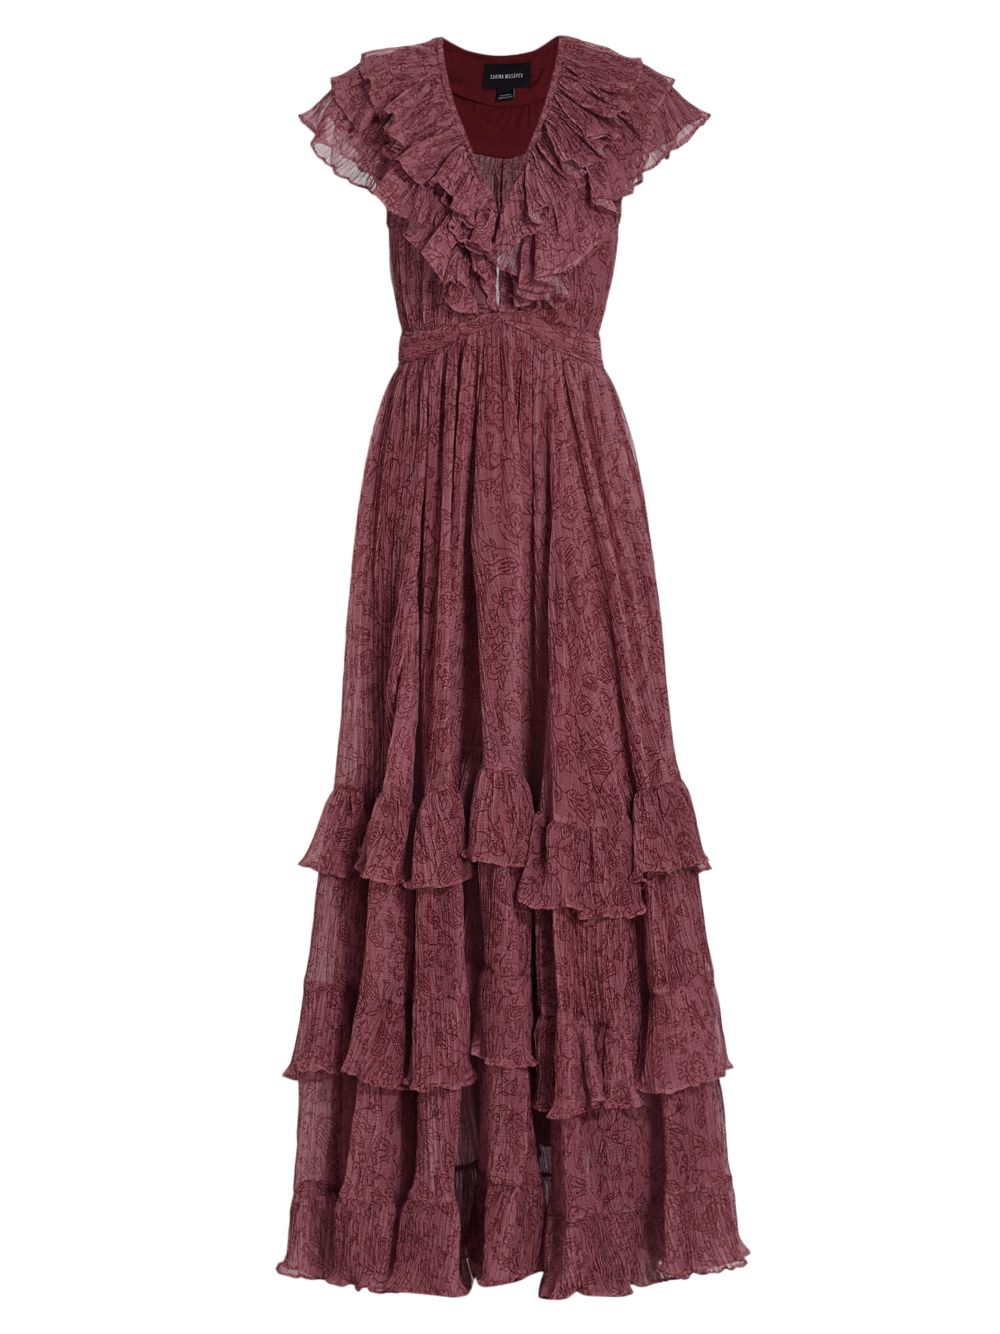 Шифоновое платье макси Infinity с оборками SABINA MUSÁYEV, роза платье макси с эффектом металлик afek плиссе sabina musáyev цвет sandstone